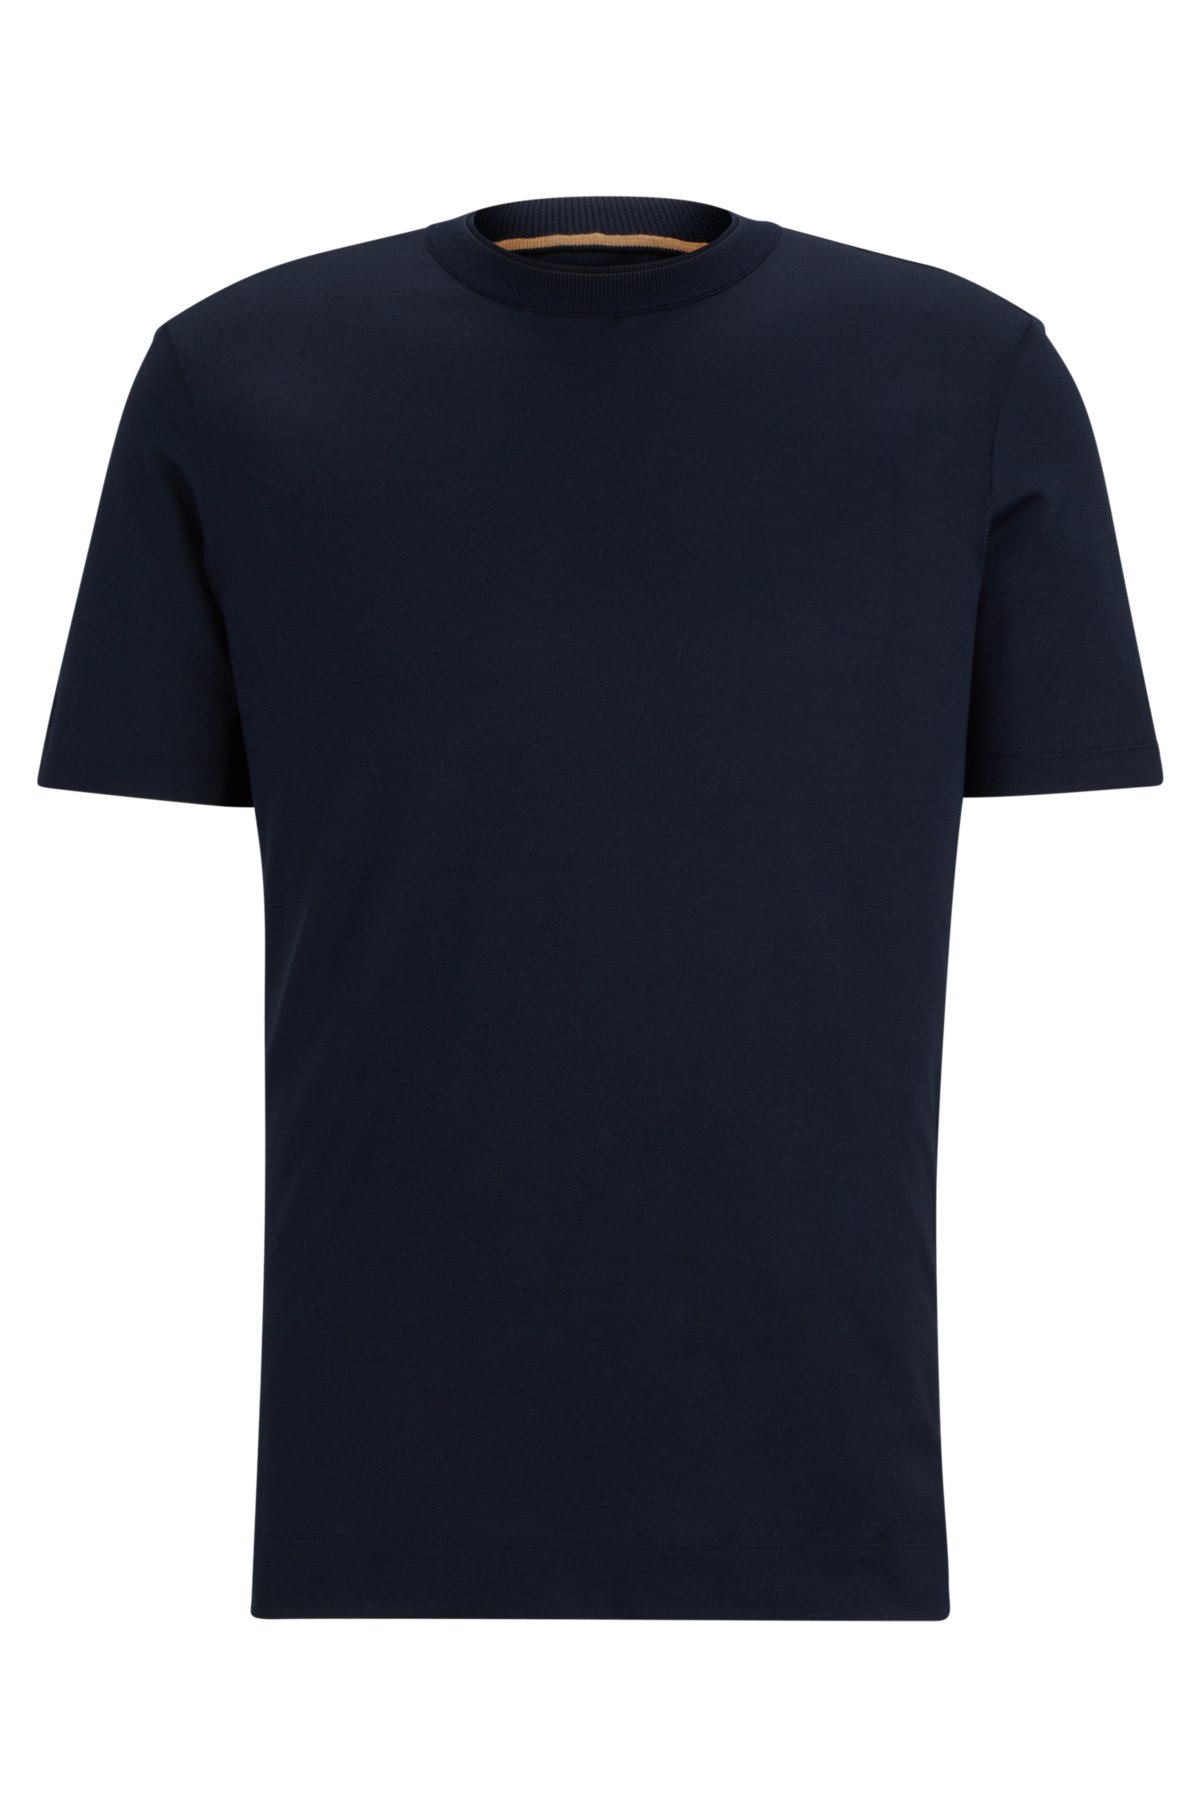 Louis Vuitton, Shirts, Louis Vuitton Studio Jacquard Crewneck Sweater  Size M